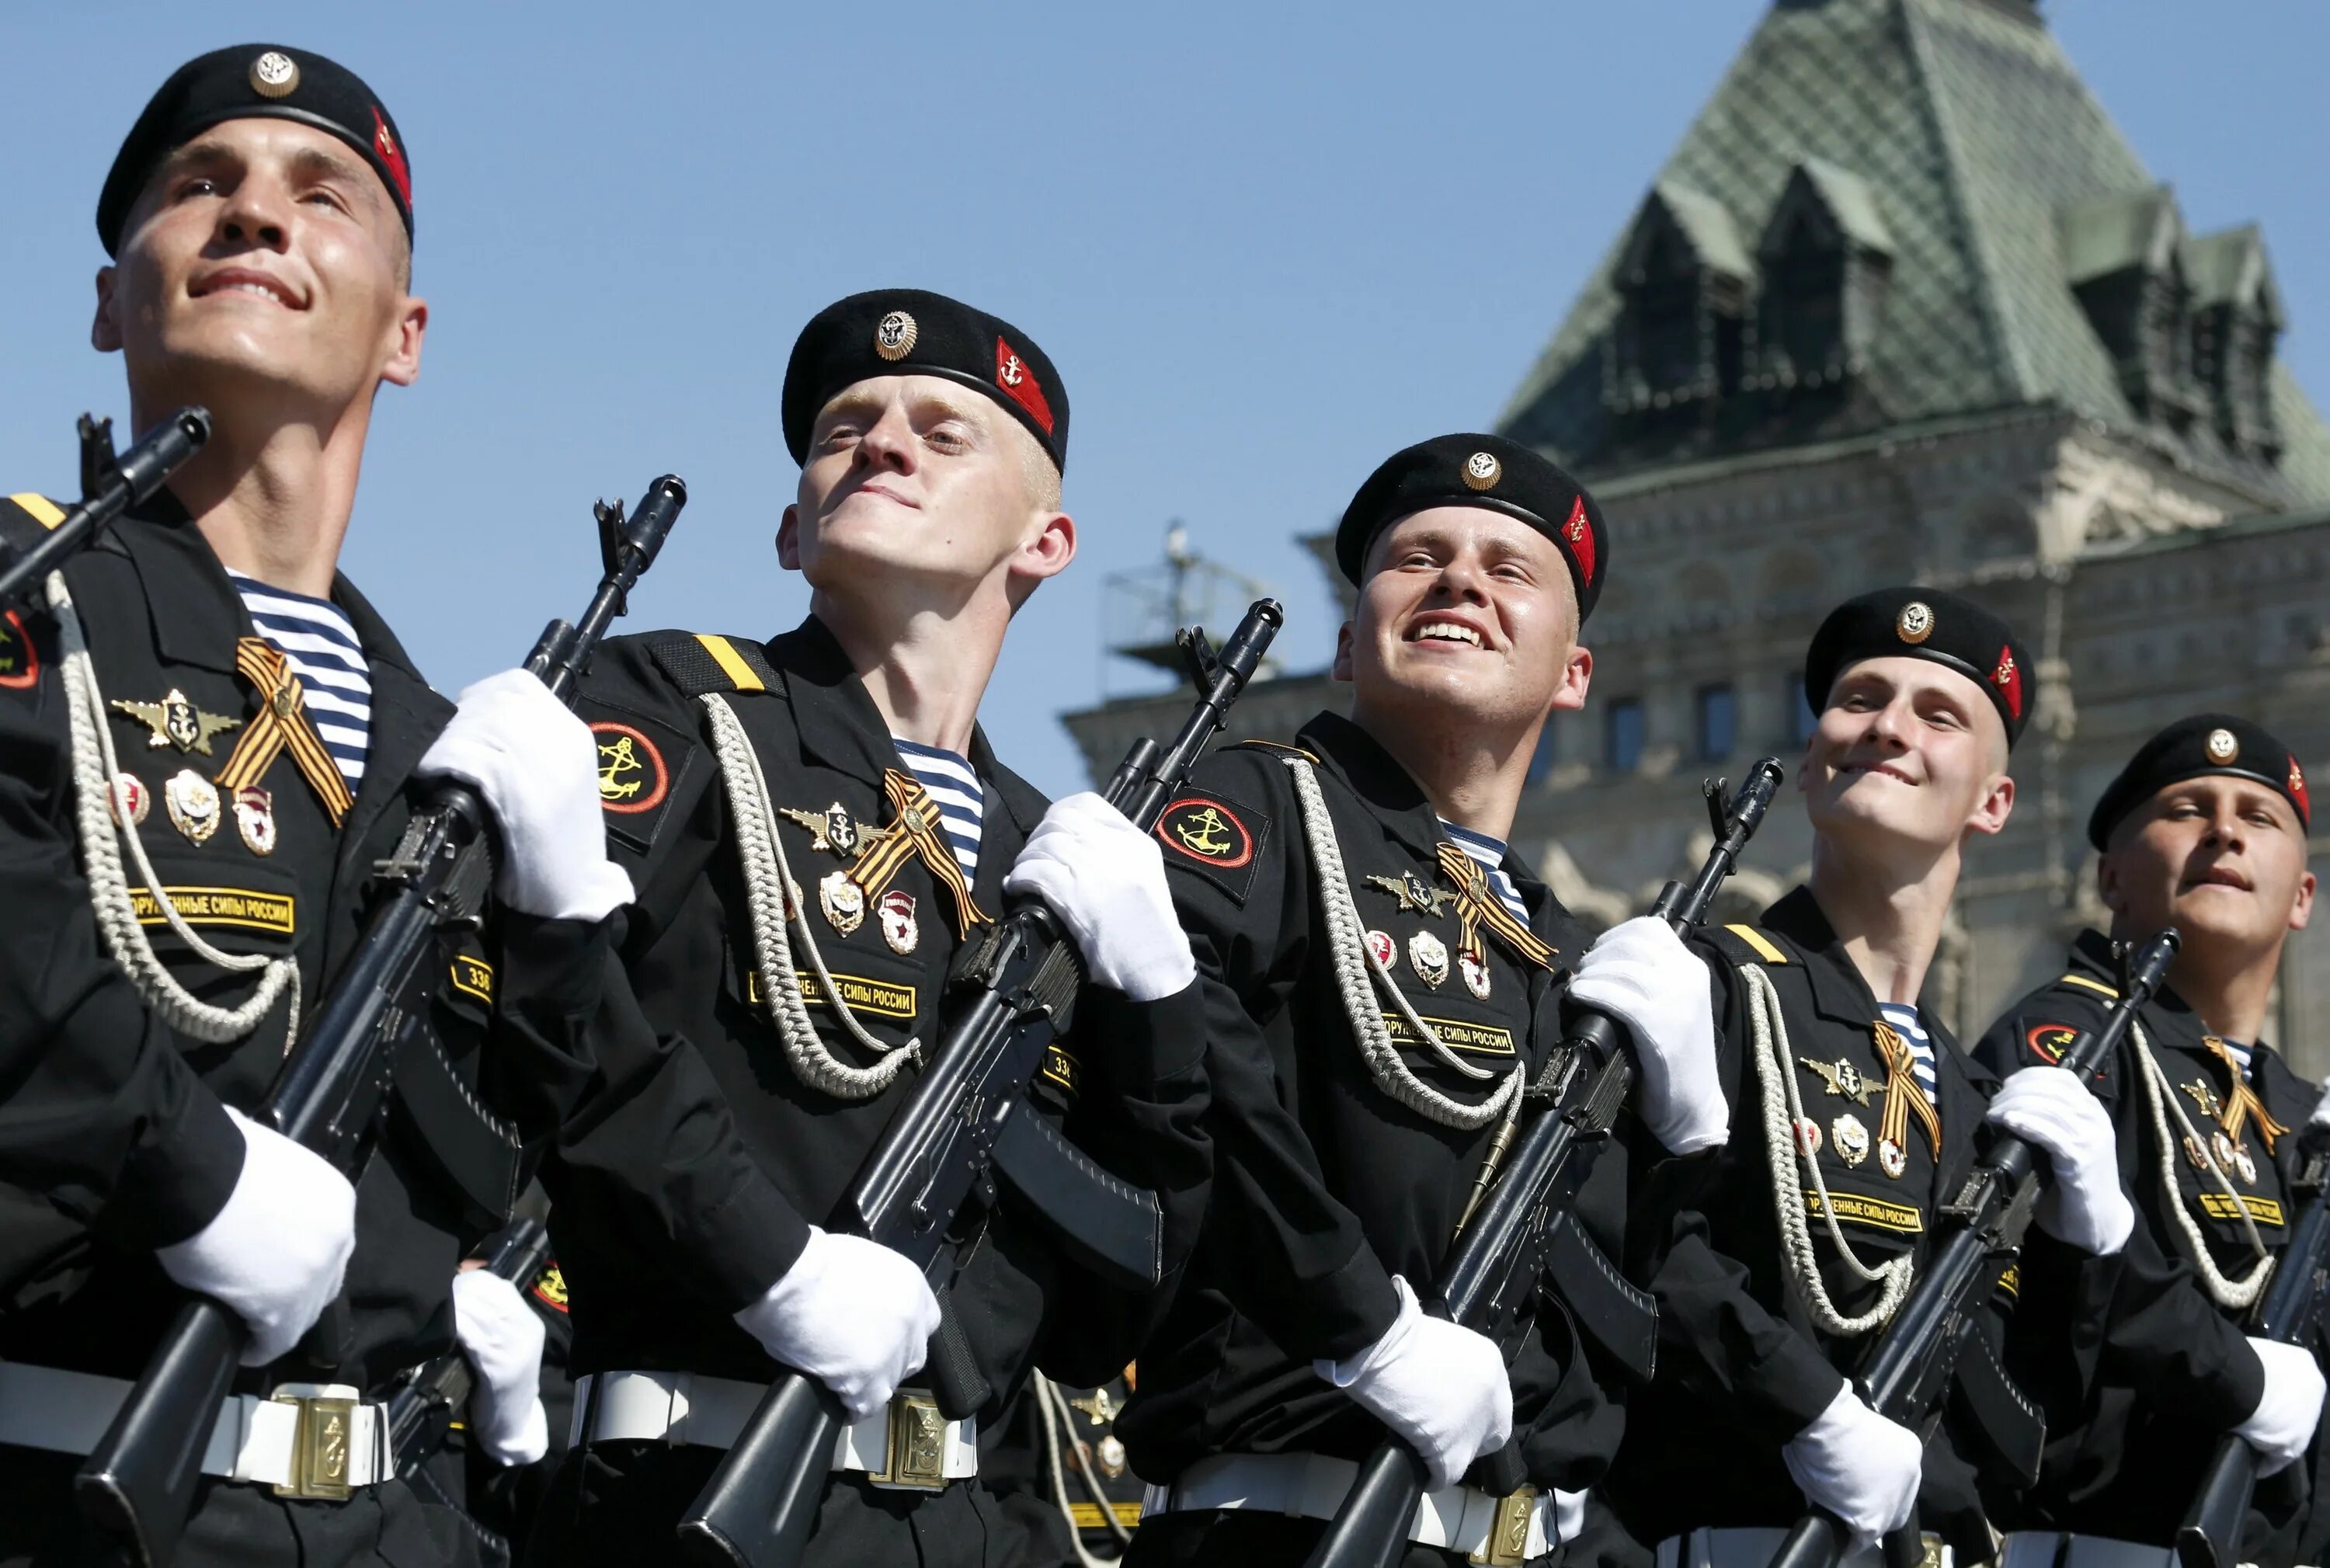 Солдаты на параде. Российский солдат на параде. Солдаты на параде Победы. Российские солдаты на параде Победы.